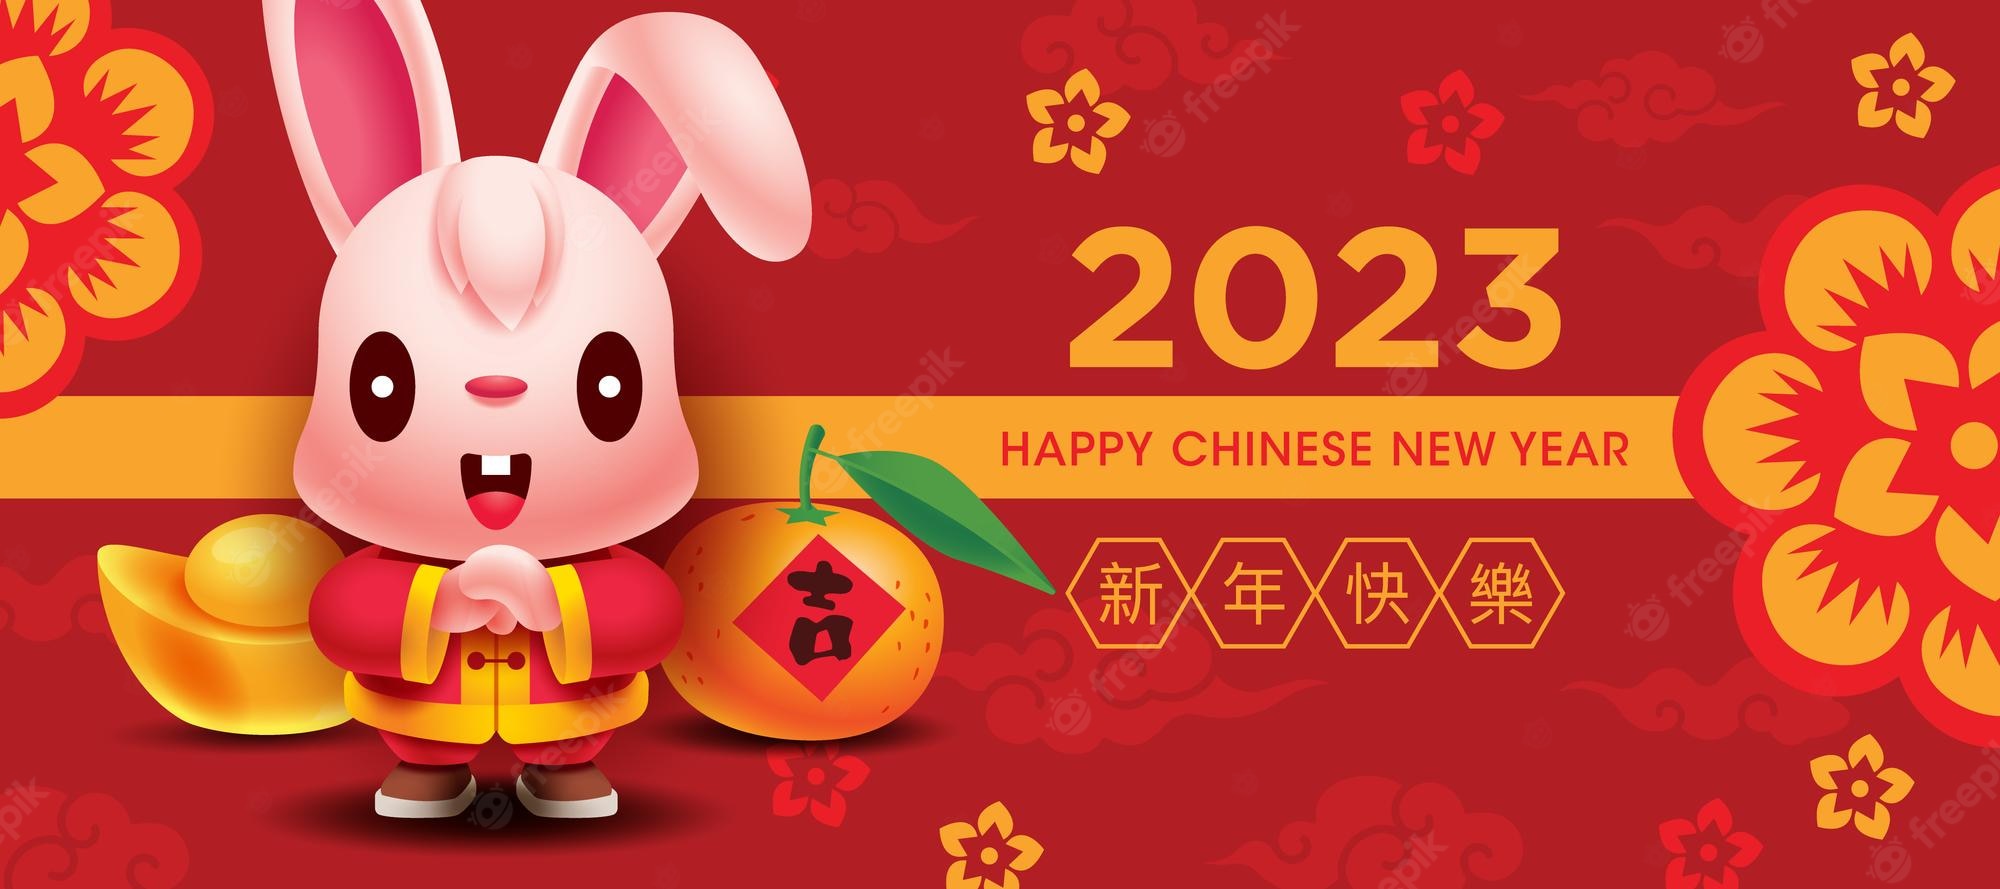 2023-kineska-nova-godina-slatki-zec-pozdrav-banner-sa-zlatnom-mandarinom-narandžasto-crvenom-pozadinom_438266-587